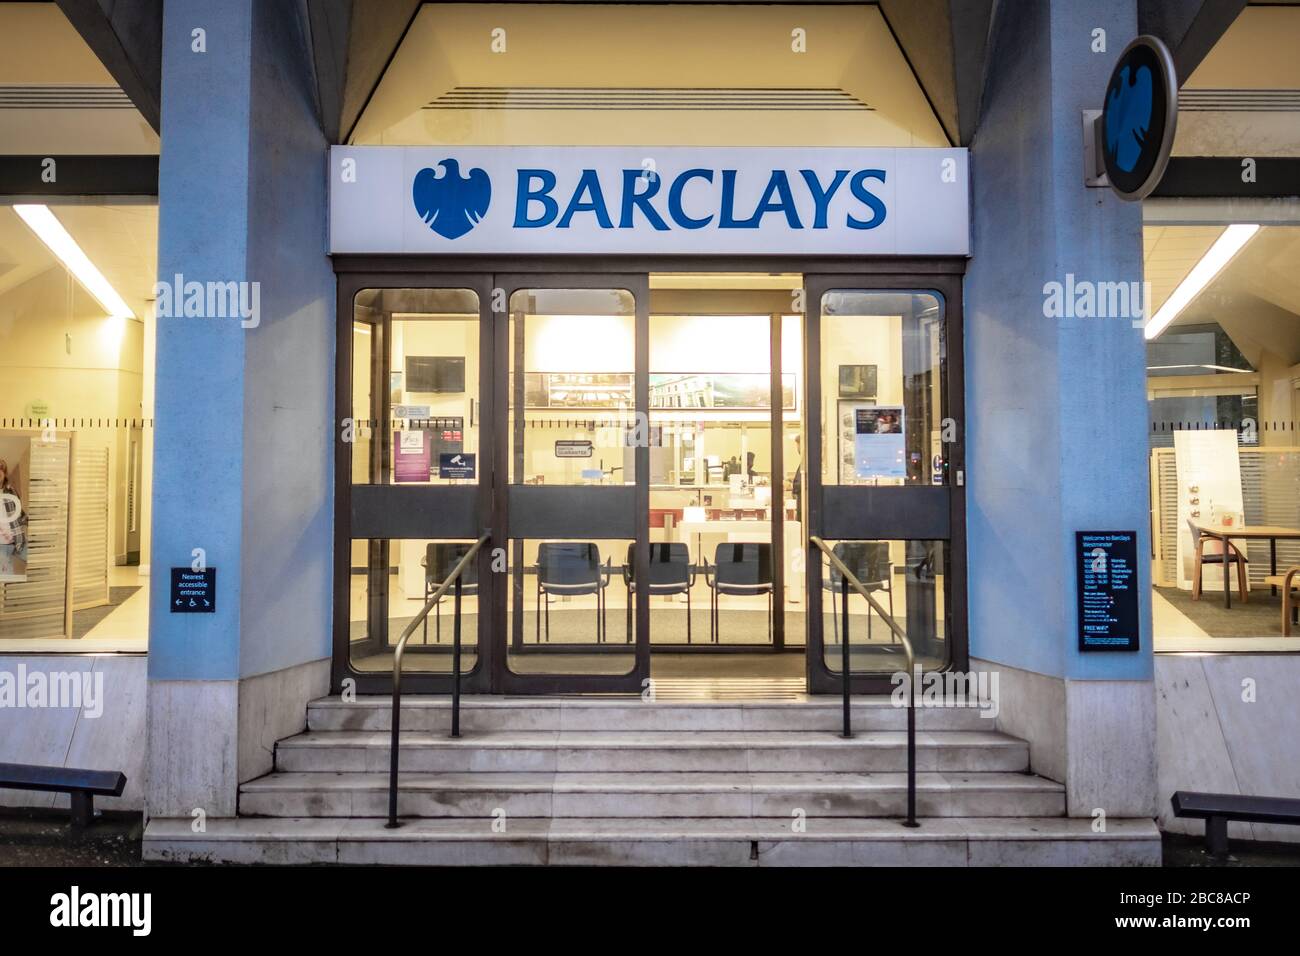 Barclays High Street Bank Branch Signage - Londra Regno Unito Foto Stock